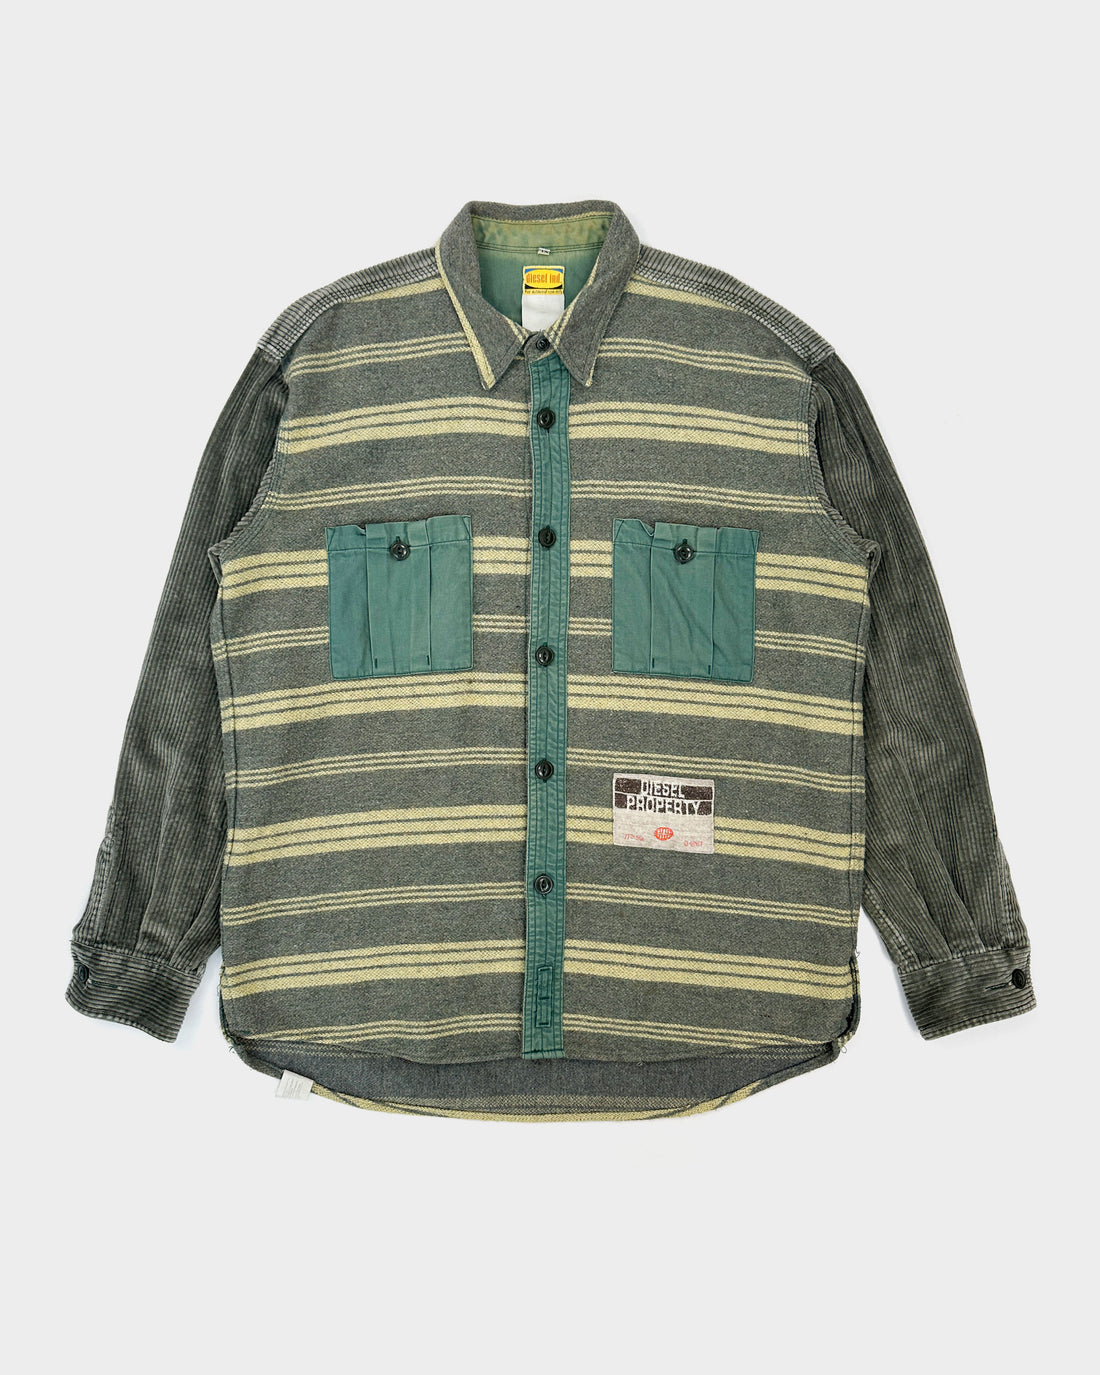 Diesel Flannel + Corduroy Over Shirt Jacket 2006